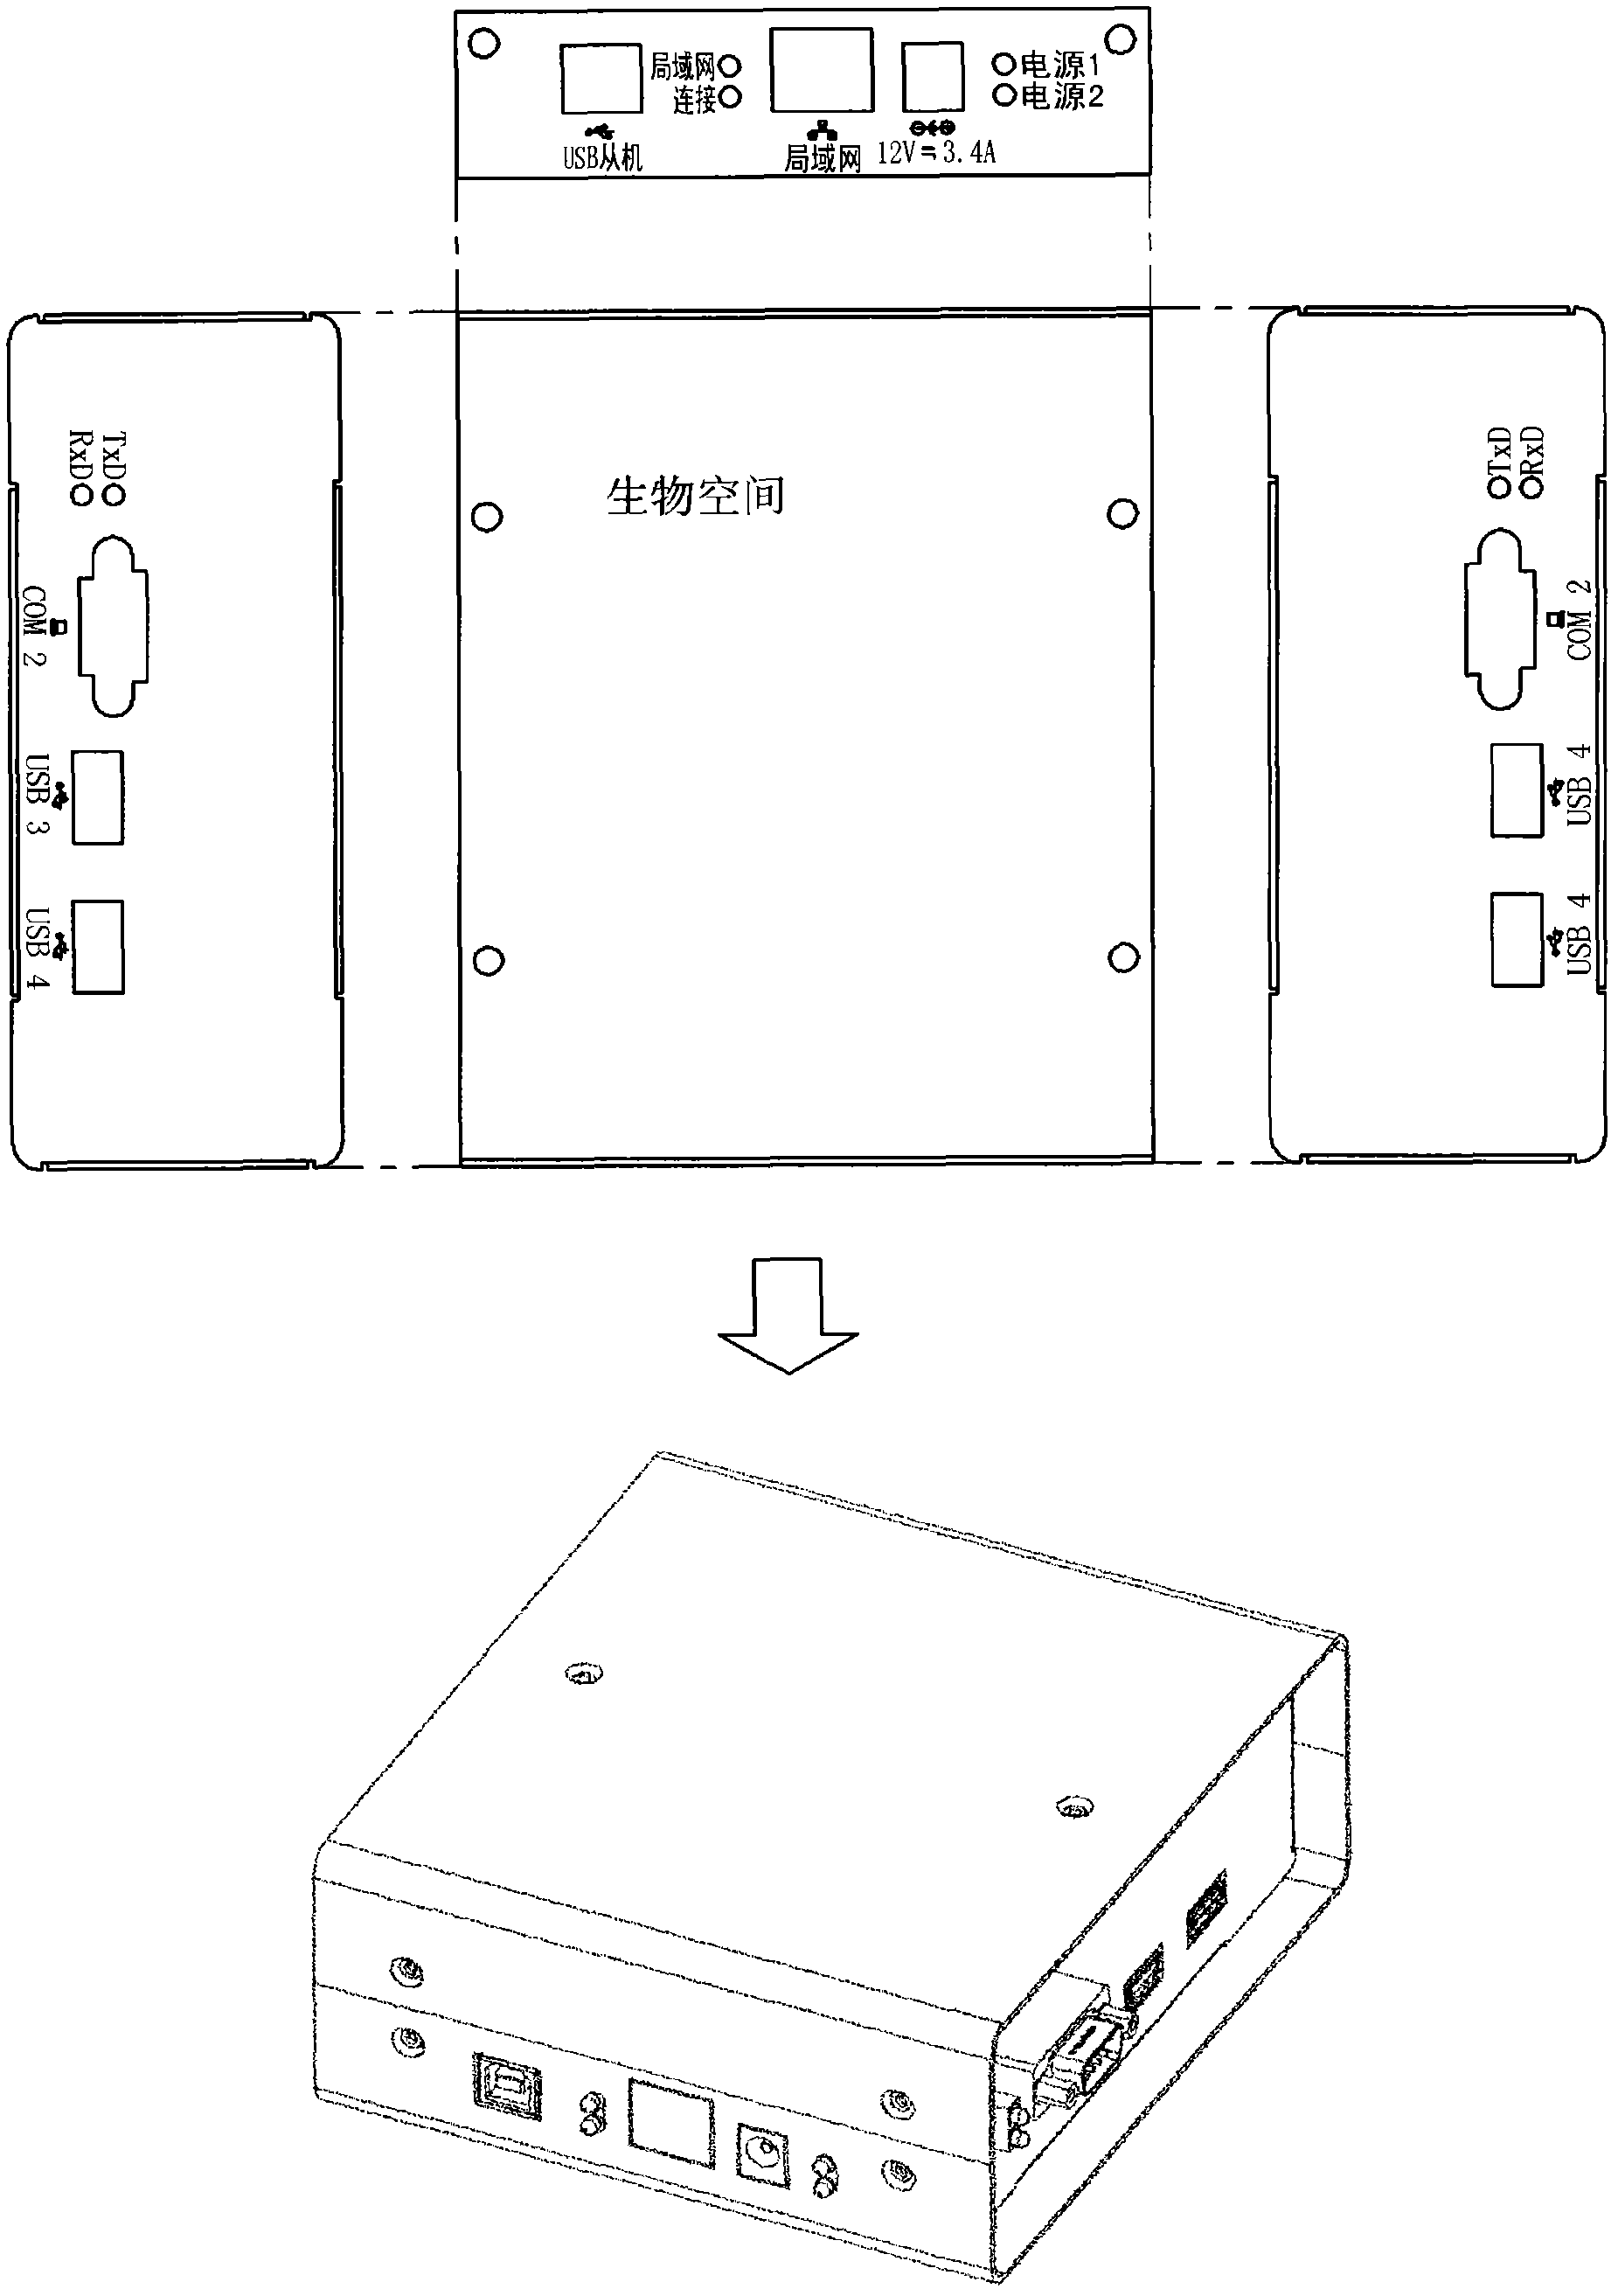 Multi protocol adapter